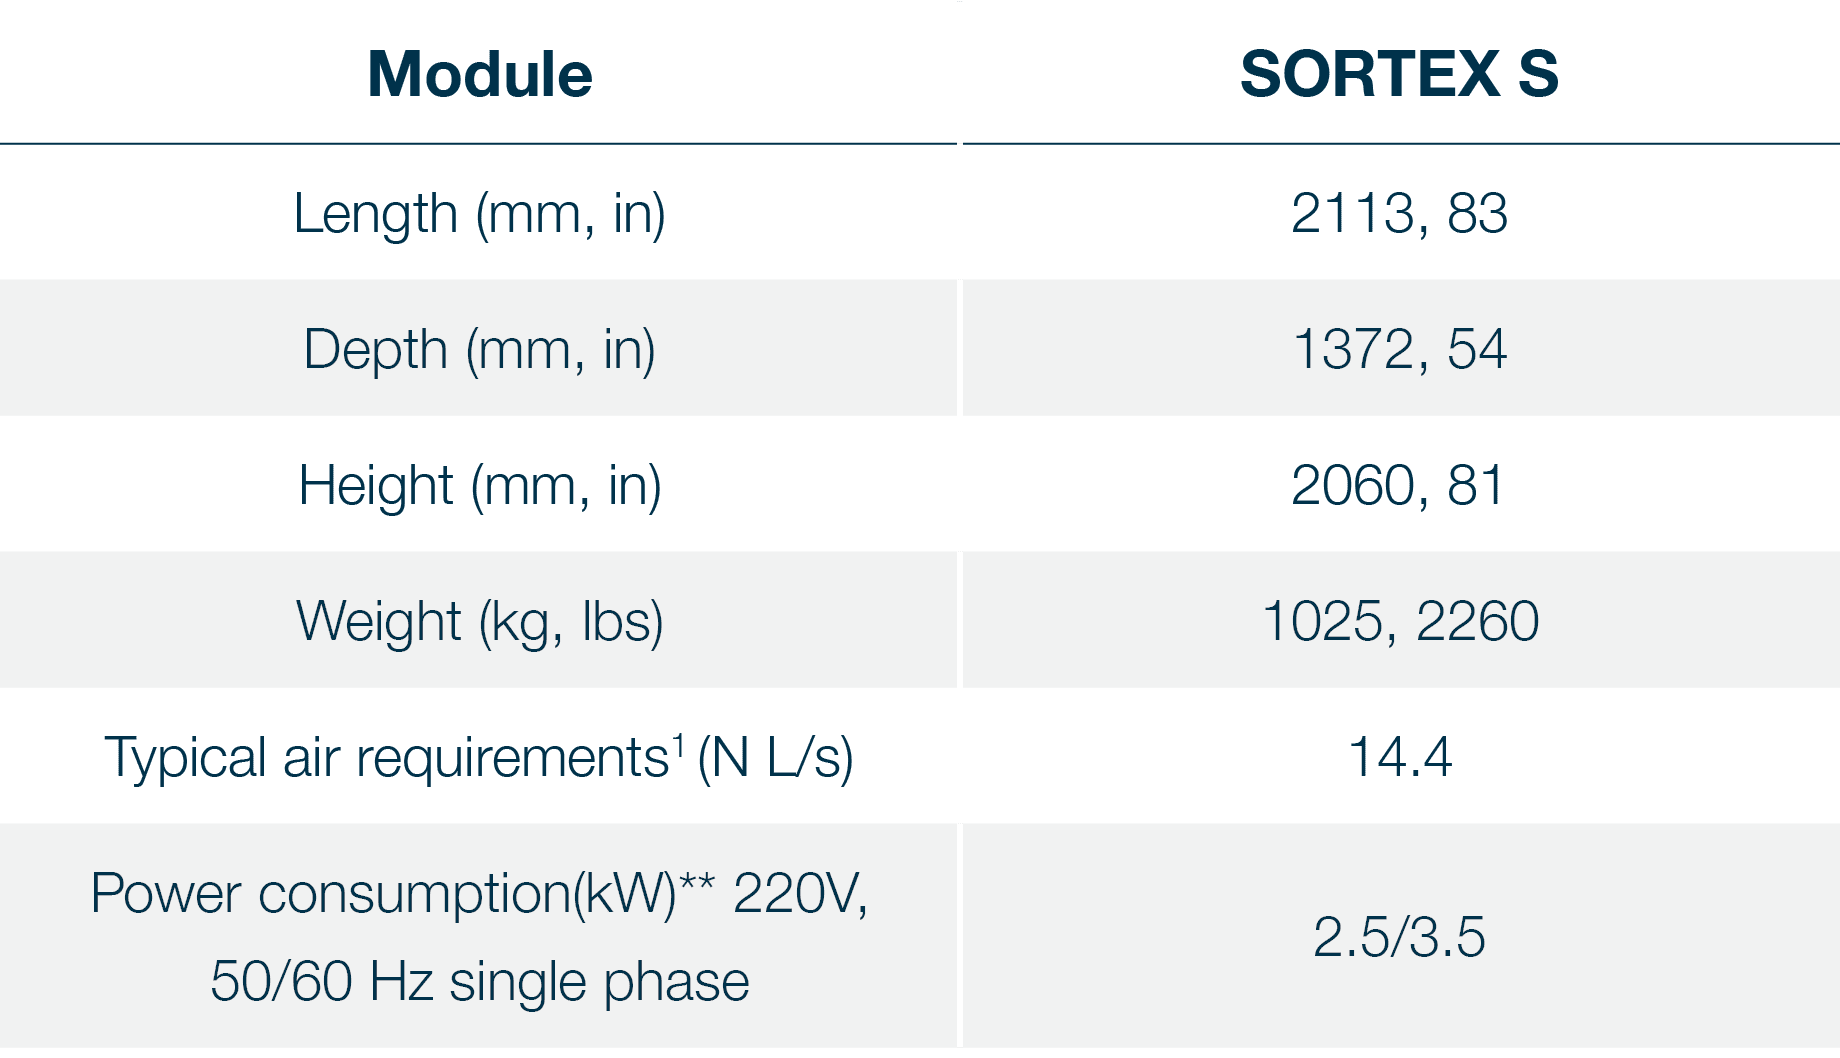 Module,SORTEX S,Length (mm, in),2113, 83,Depth (mm, in),1372, 54,Height (mm, in),2060, 81,Weight (kg, lbs),1025, 2260   